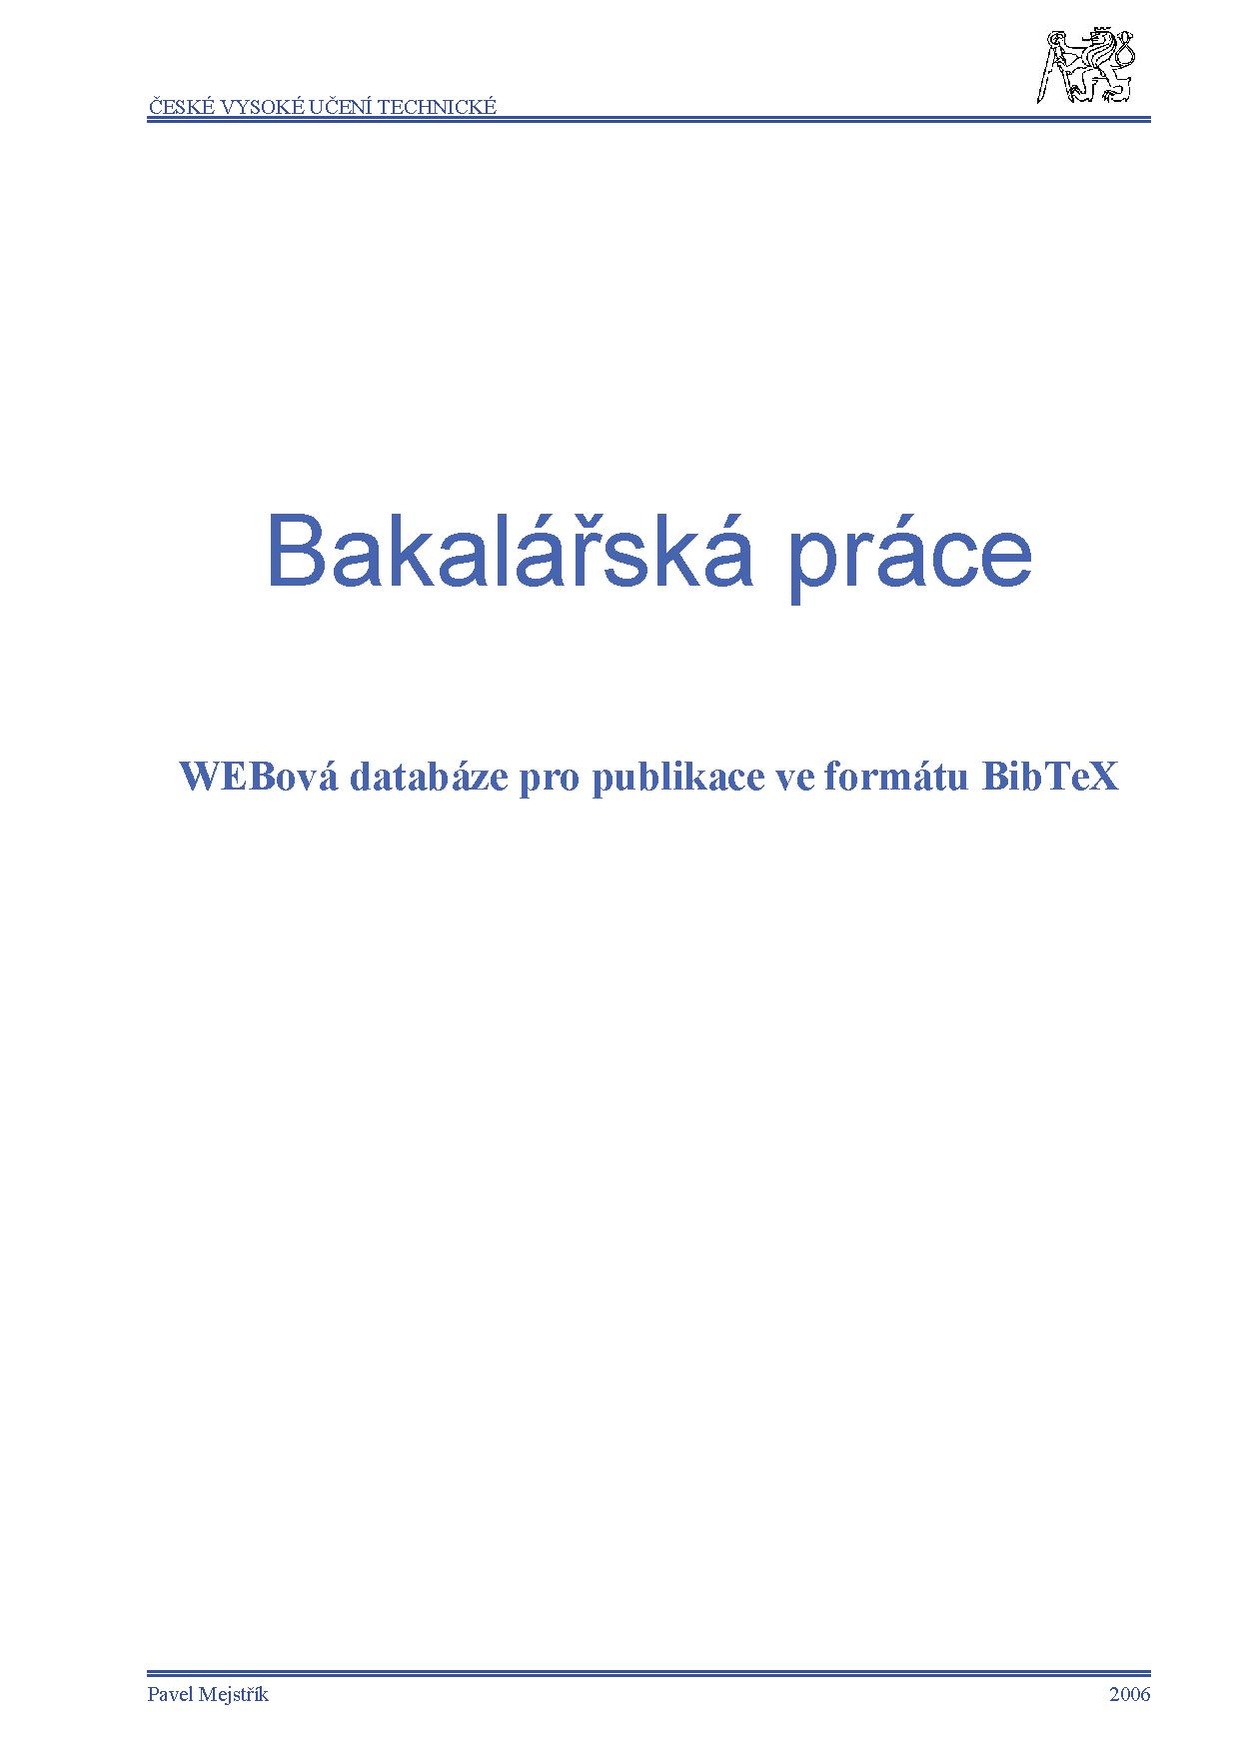 Bp 2006 mejstrik pavel.pdf